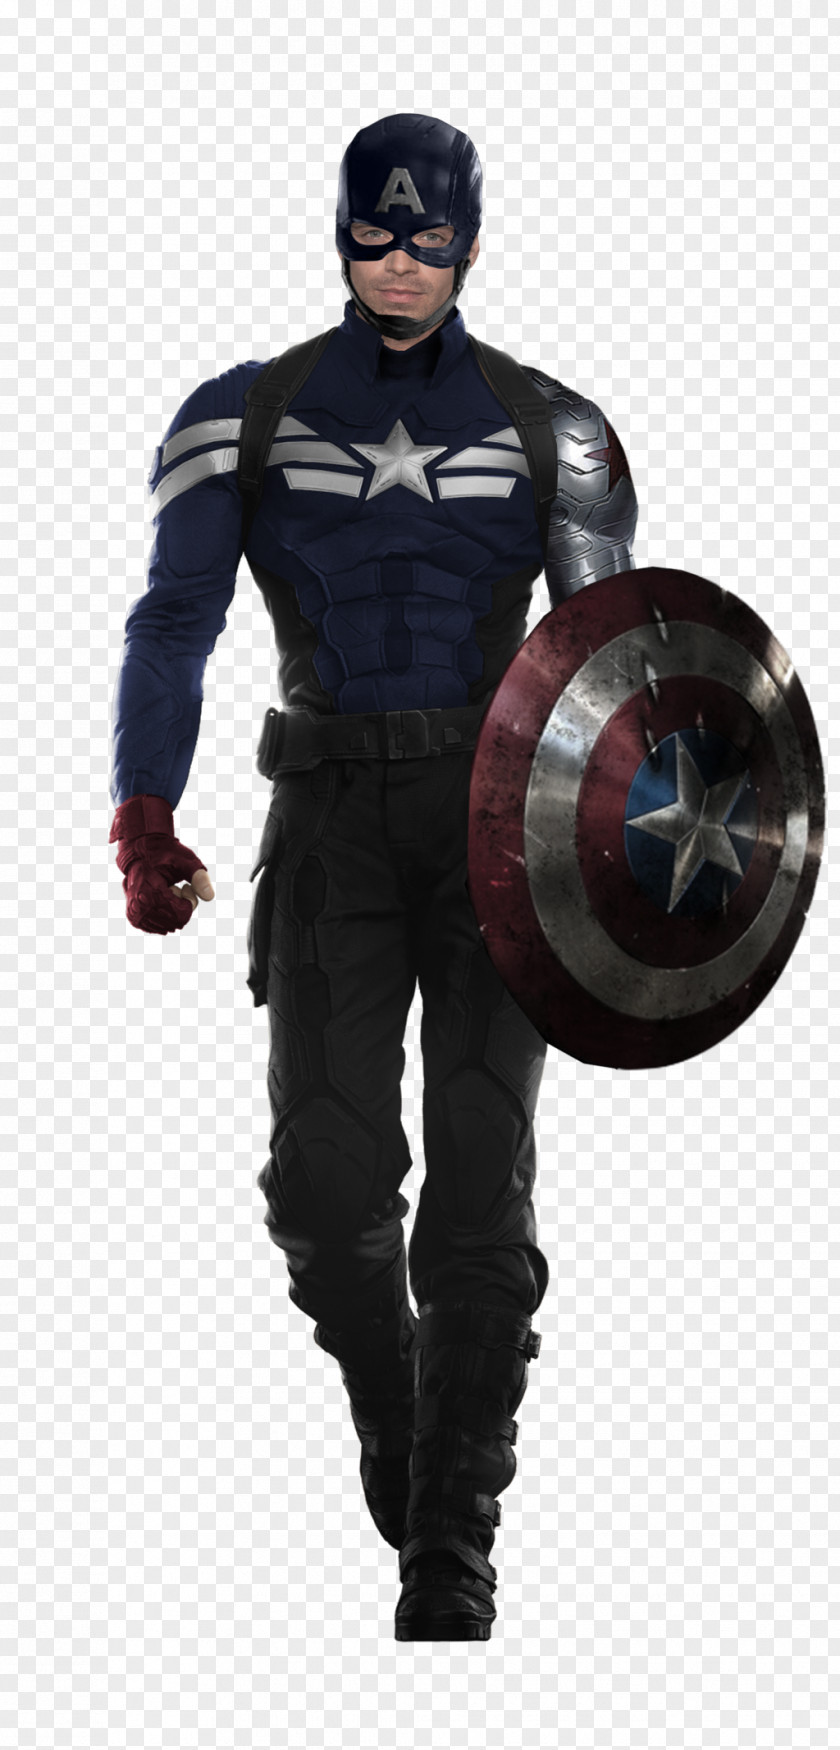 Captain America Black Widow Wanda Maximoff Bucky Barnes Costume PNG